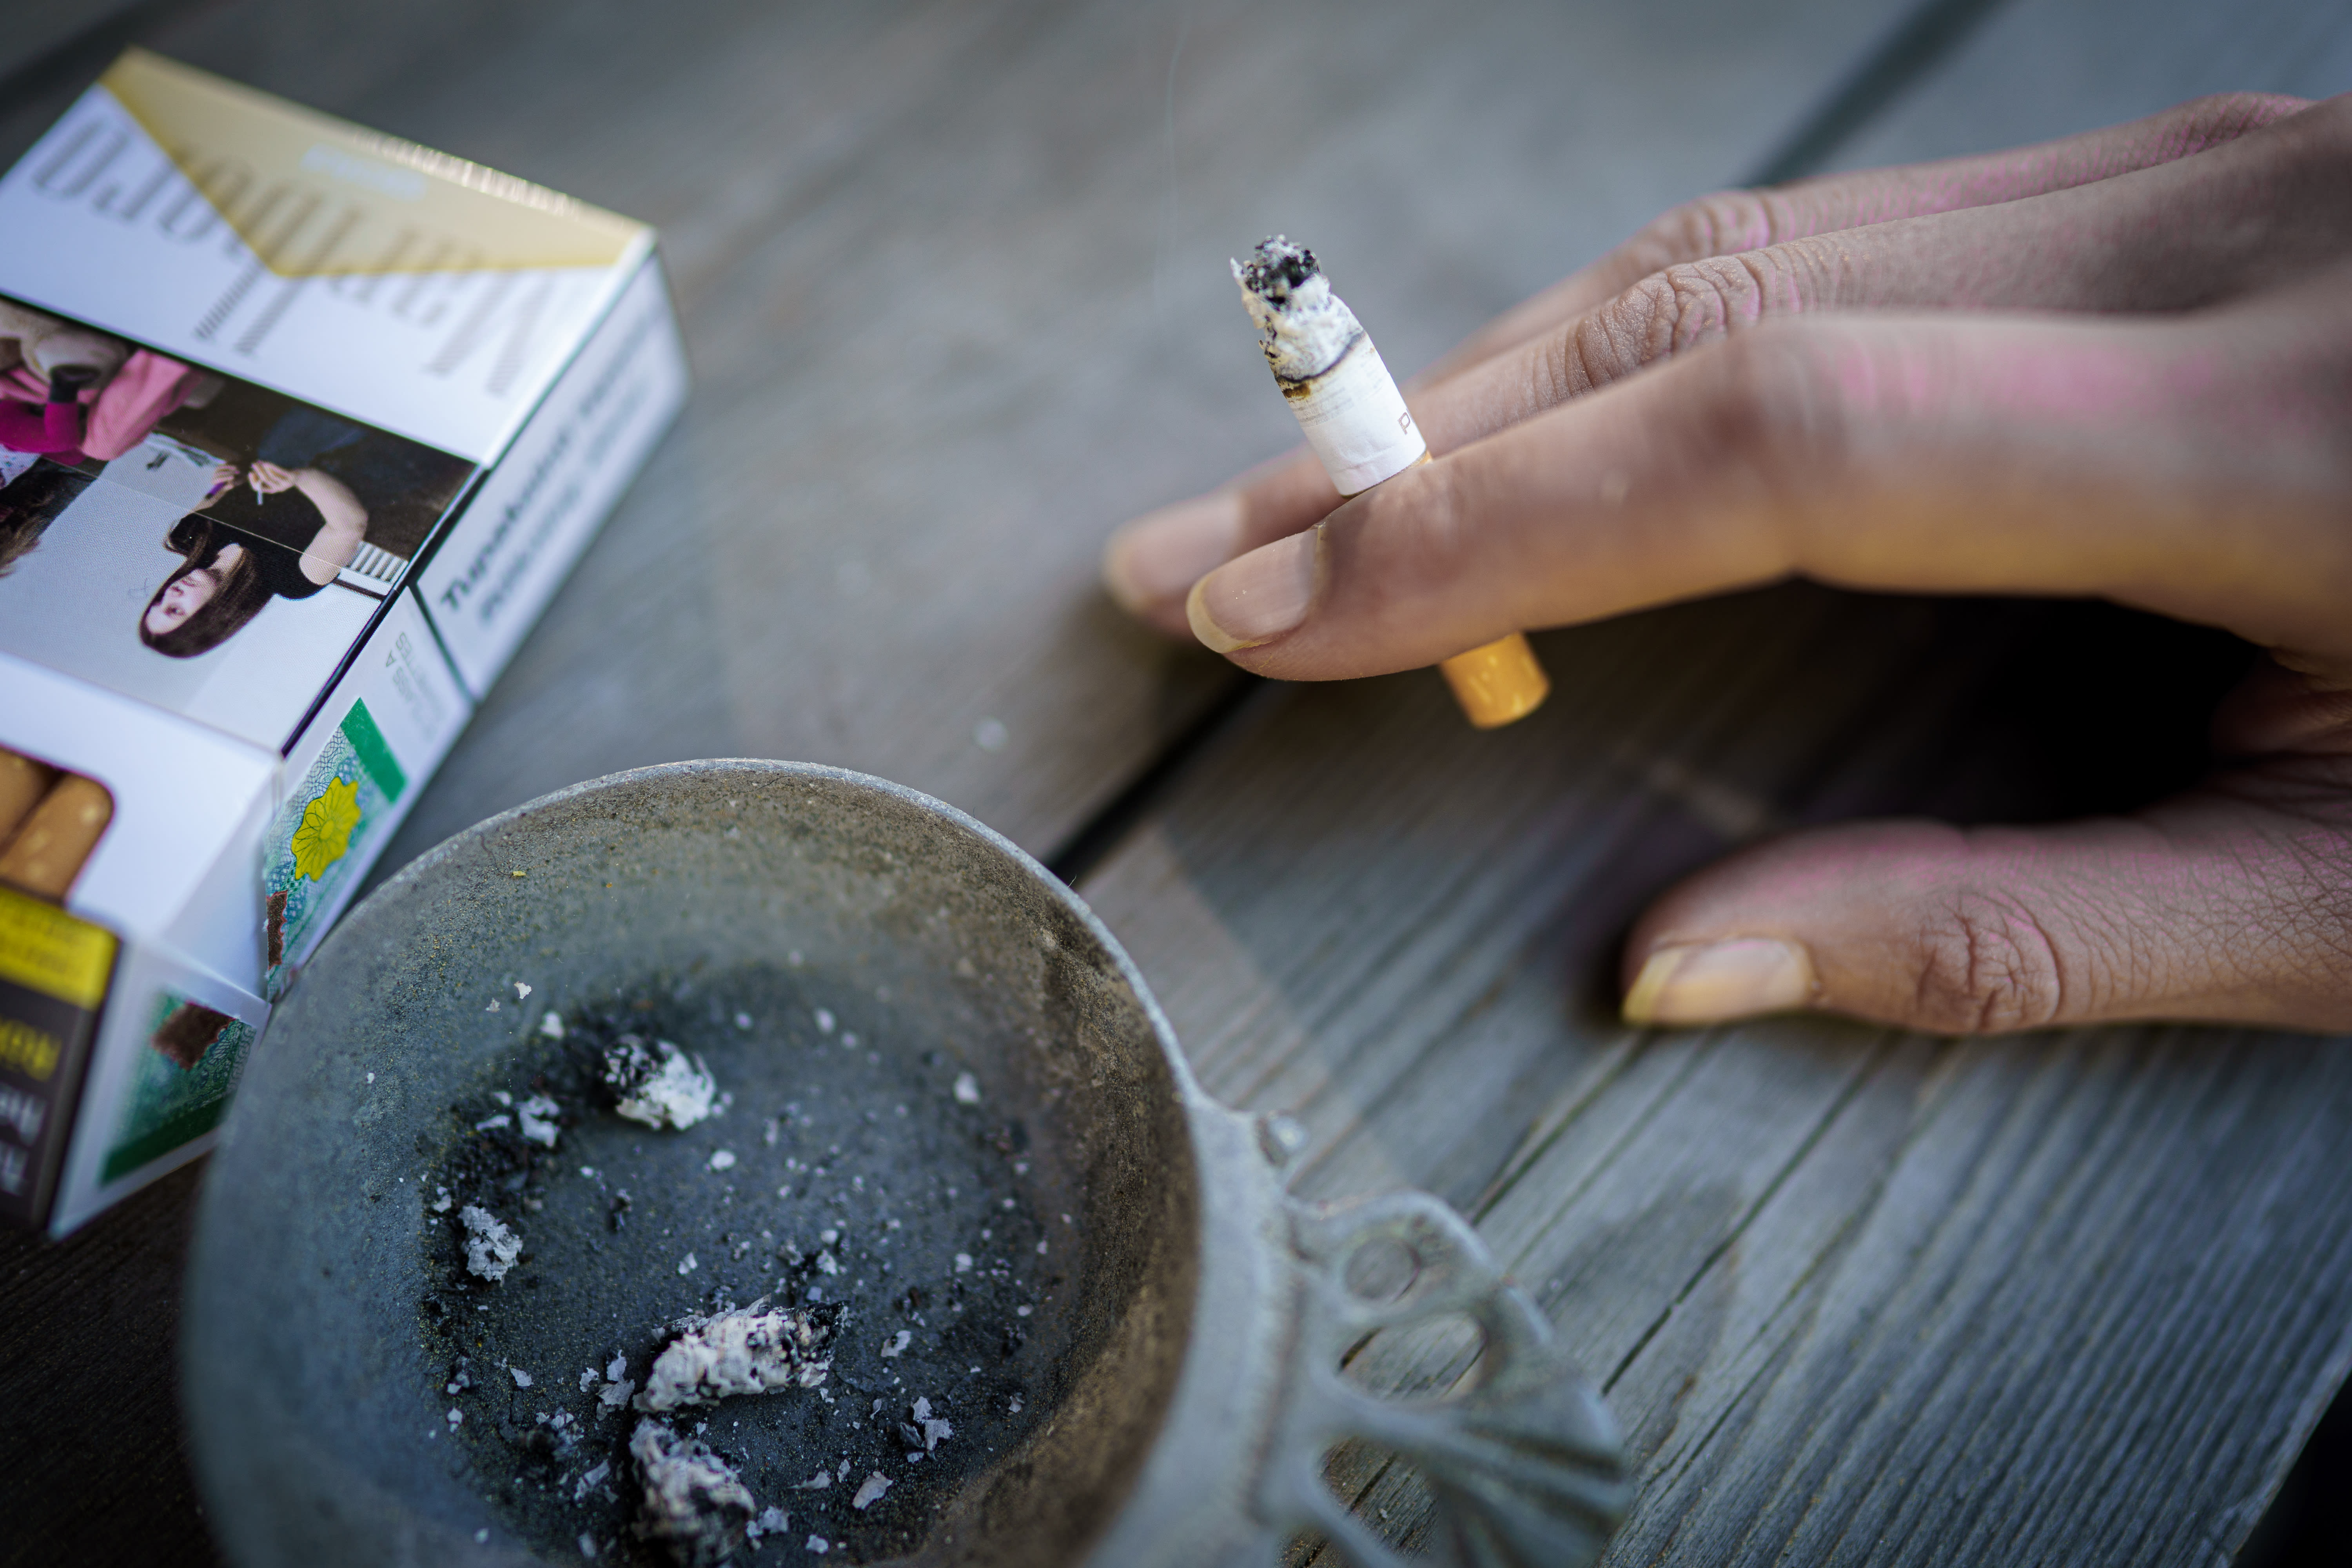 Daily smoking decreases, snus use increases